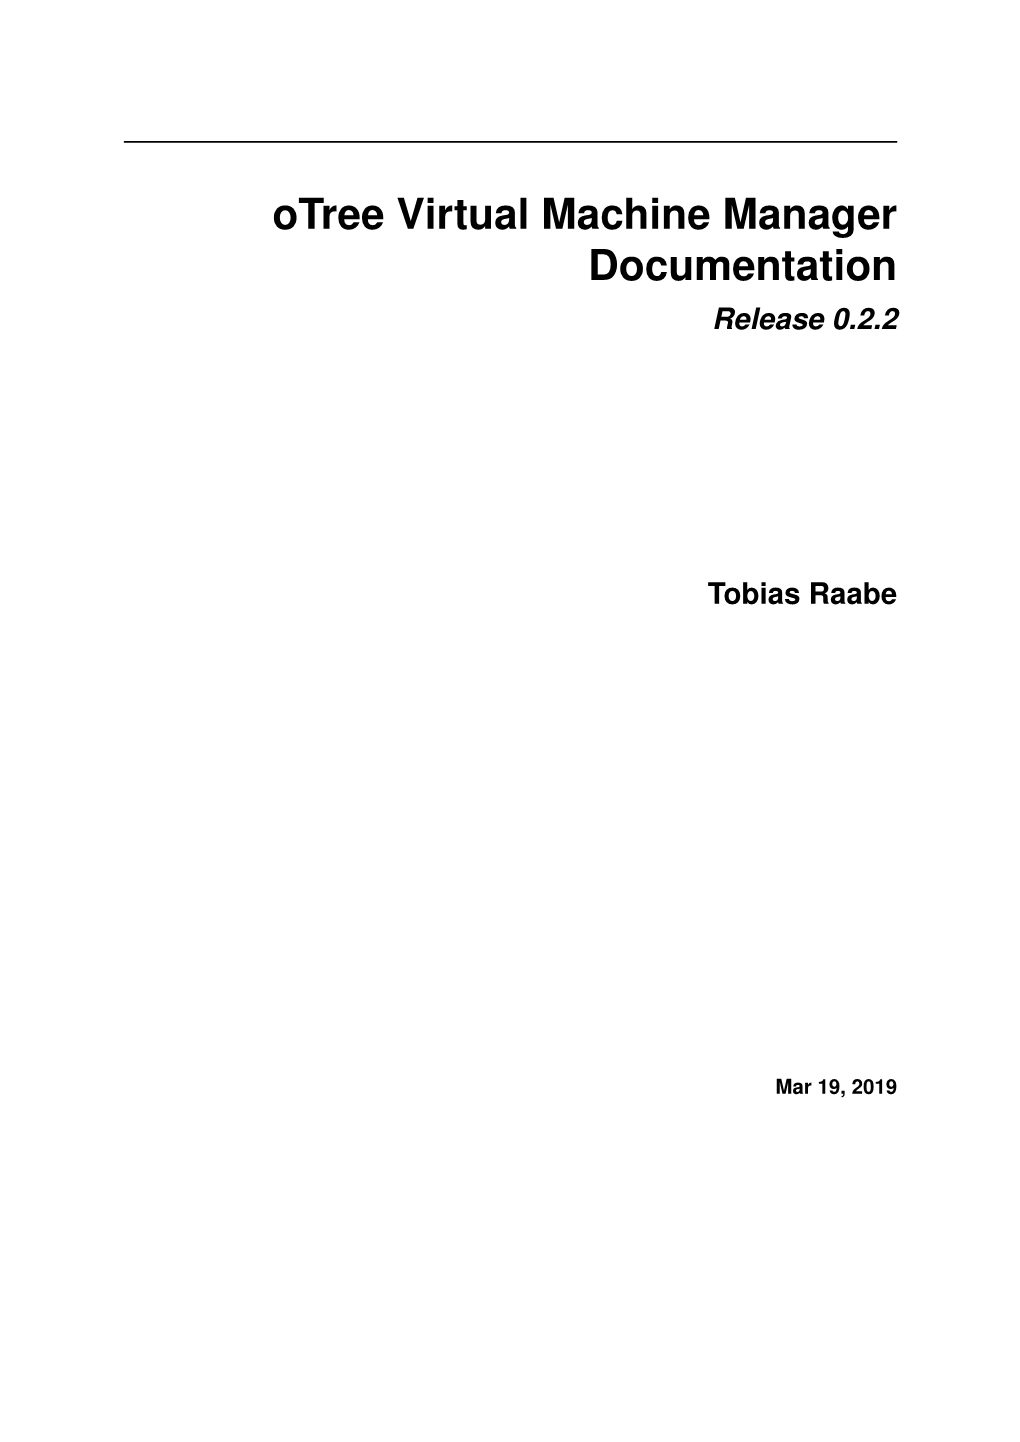 Otree Virtual Machine Manager Documentation Release 0.2.2